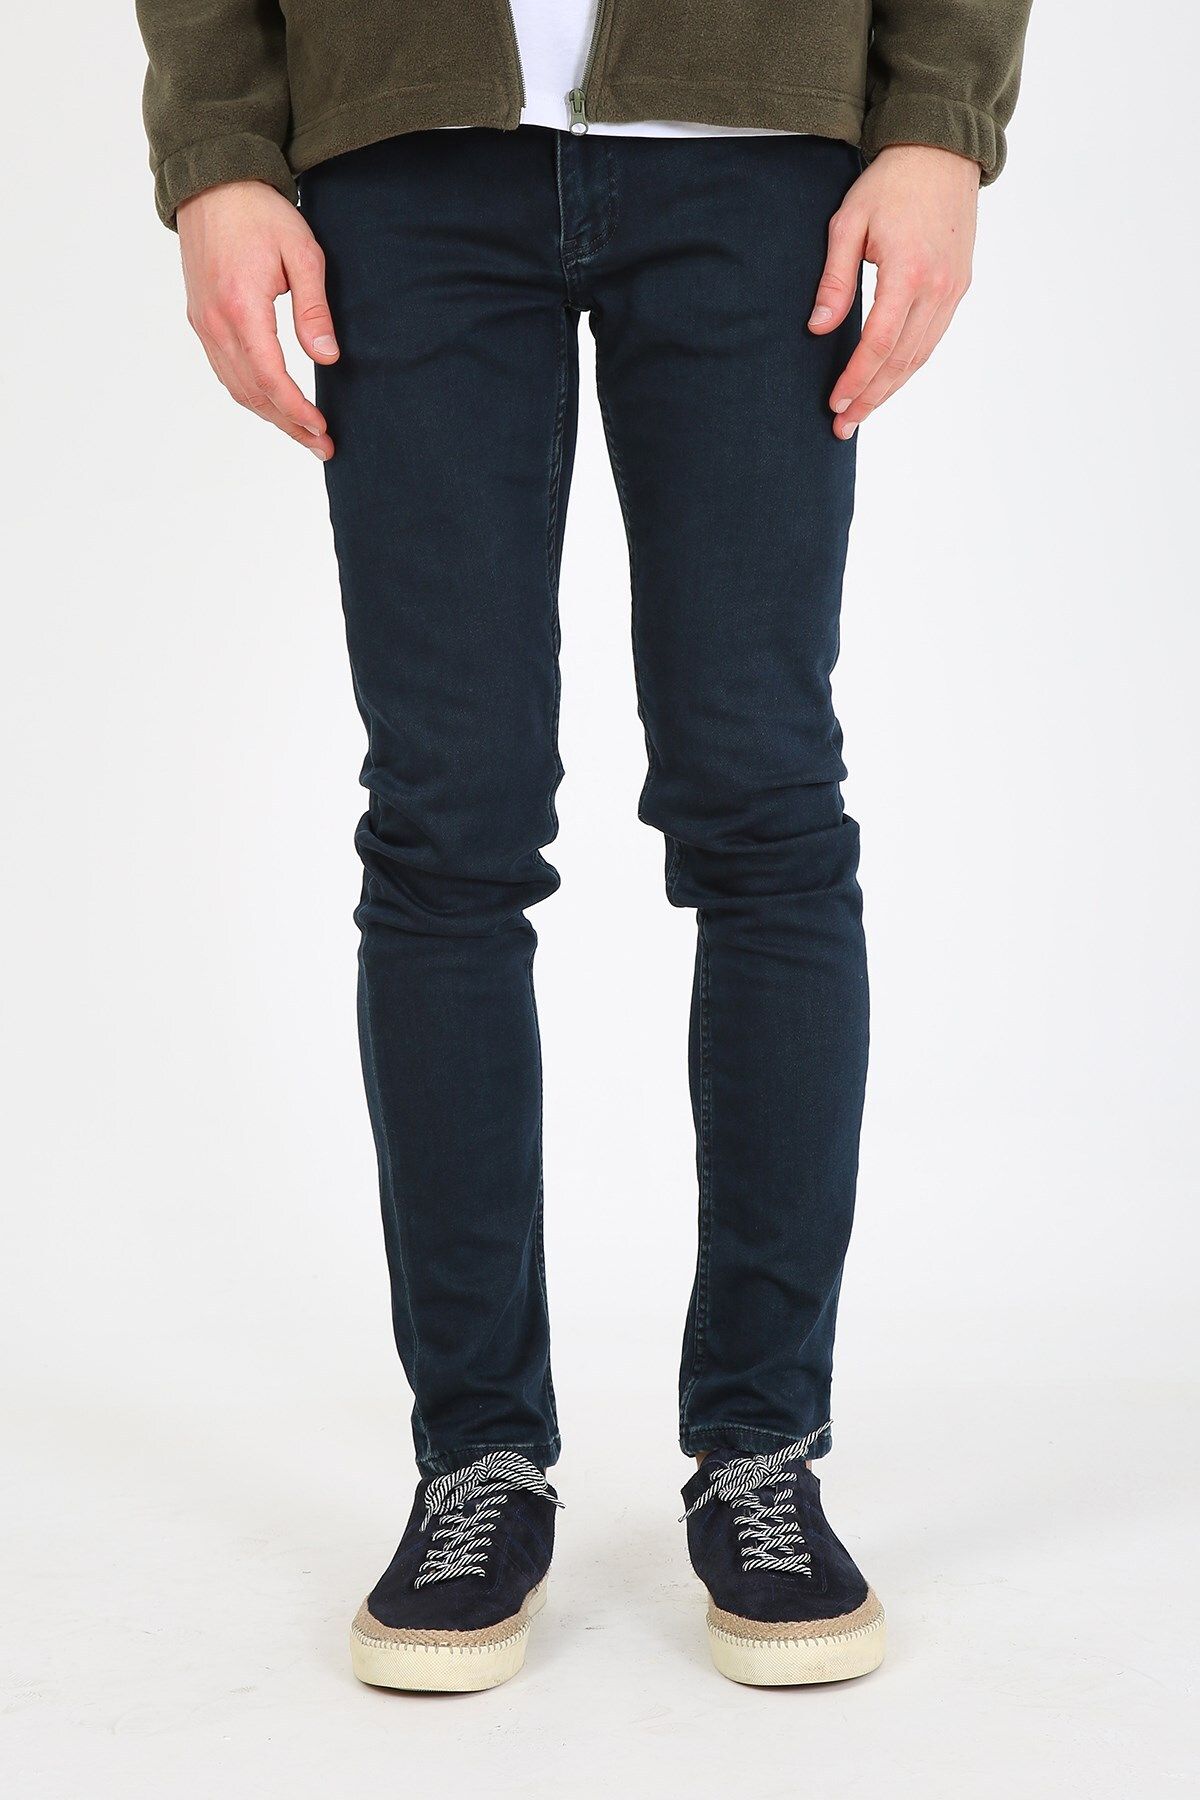 Twister Jeans Panama 640-01 Dark Blue Erkek Likralı Dar Kesim Kot Pantolon Laci